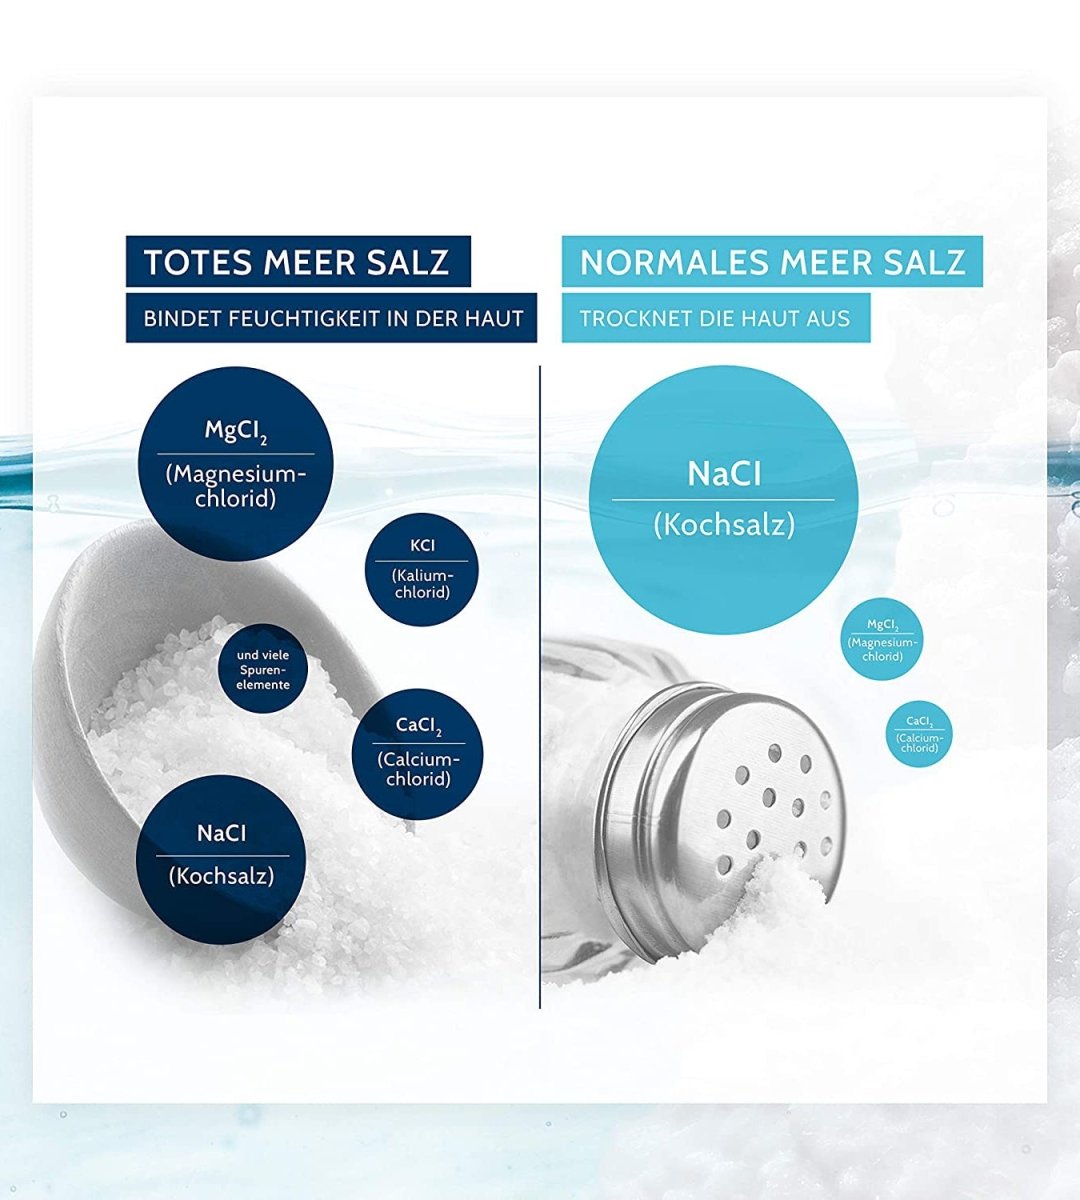 Salthouse TotesMeer-Salz-Therapie Intensiv-Creme-Forte Salzvergleich 100ml